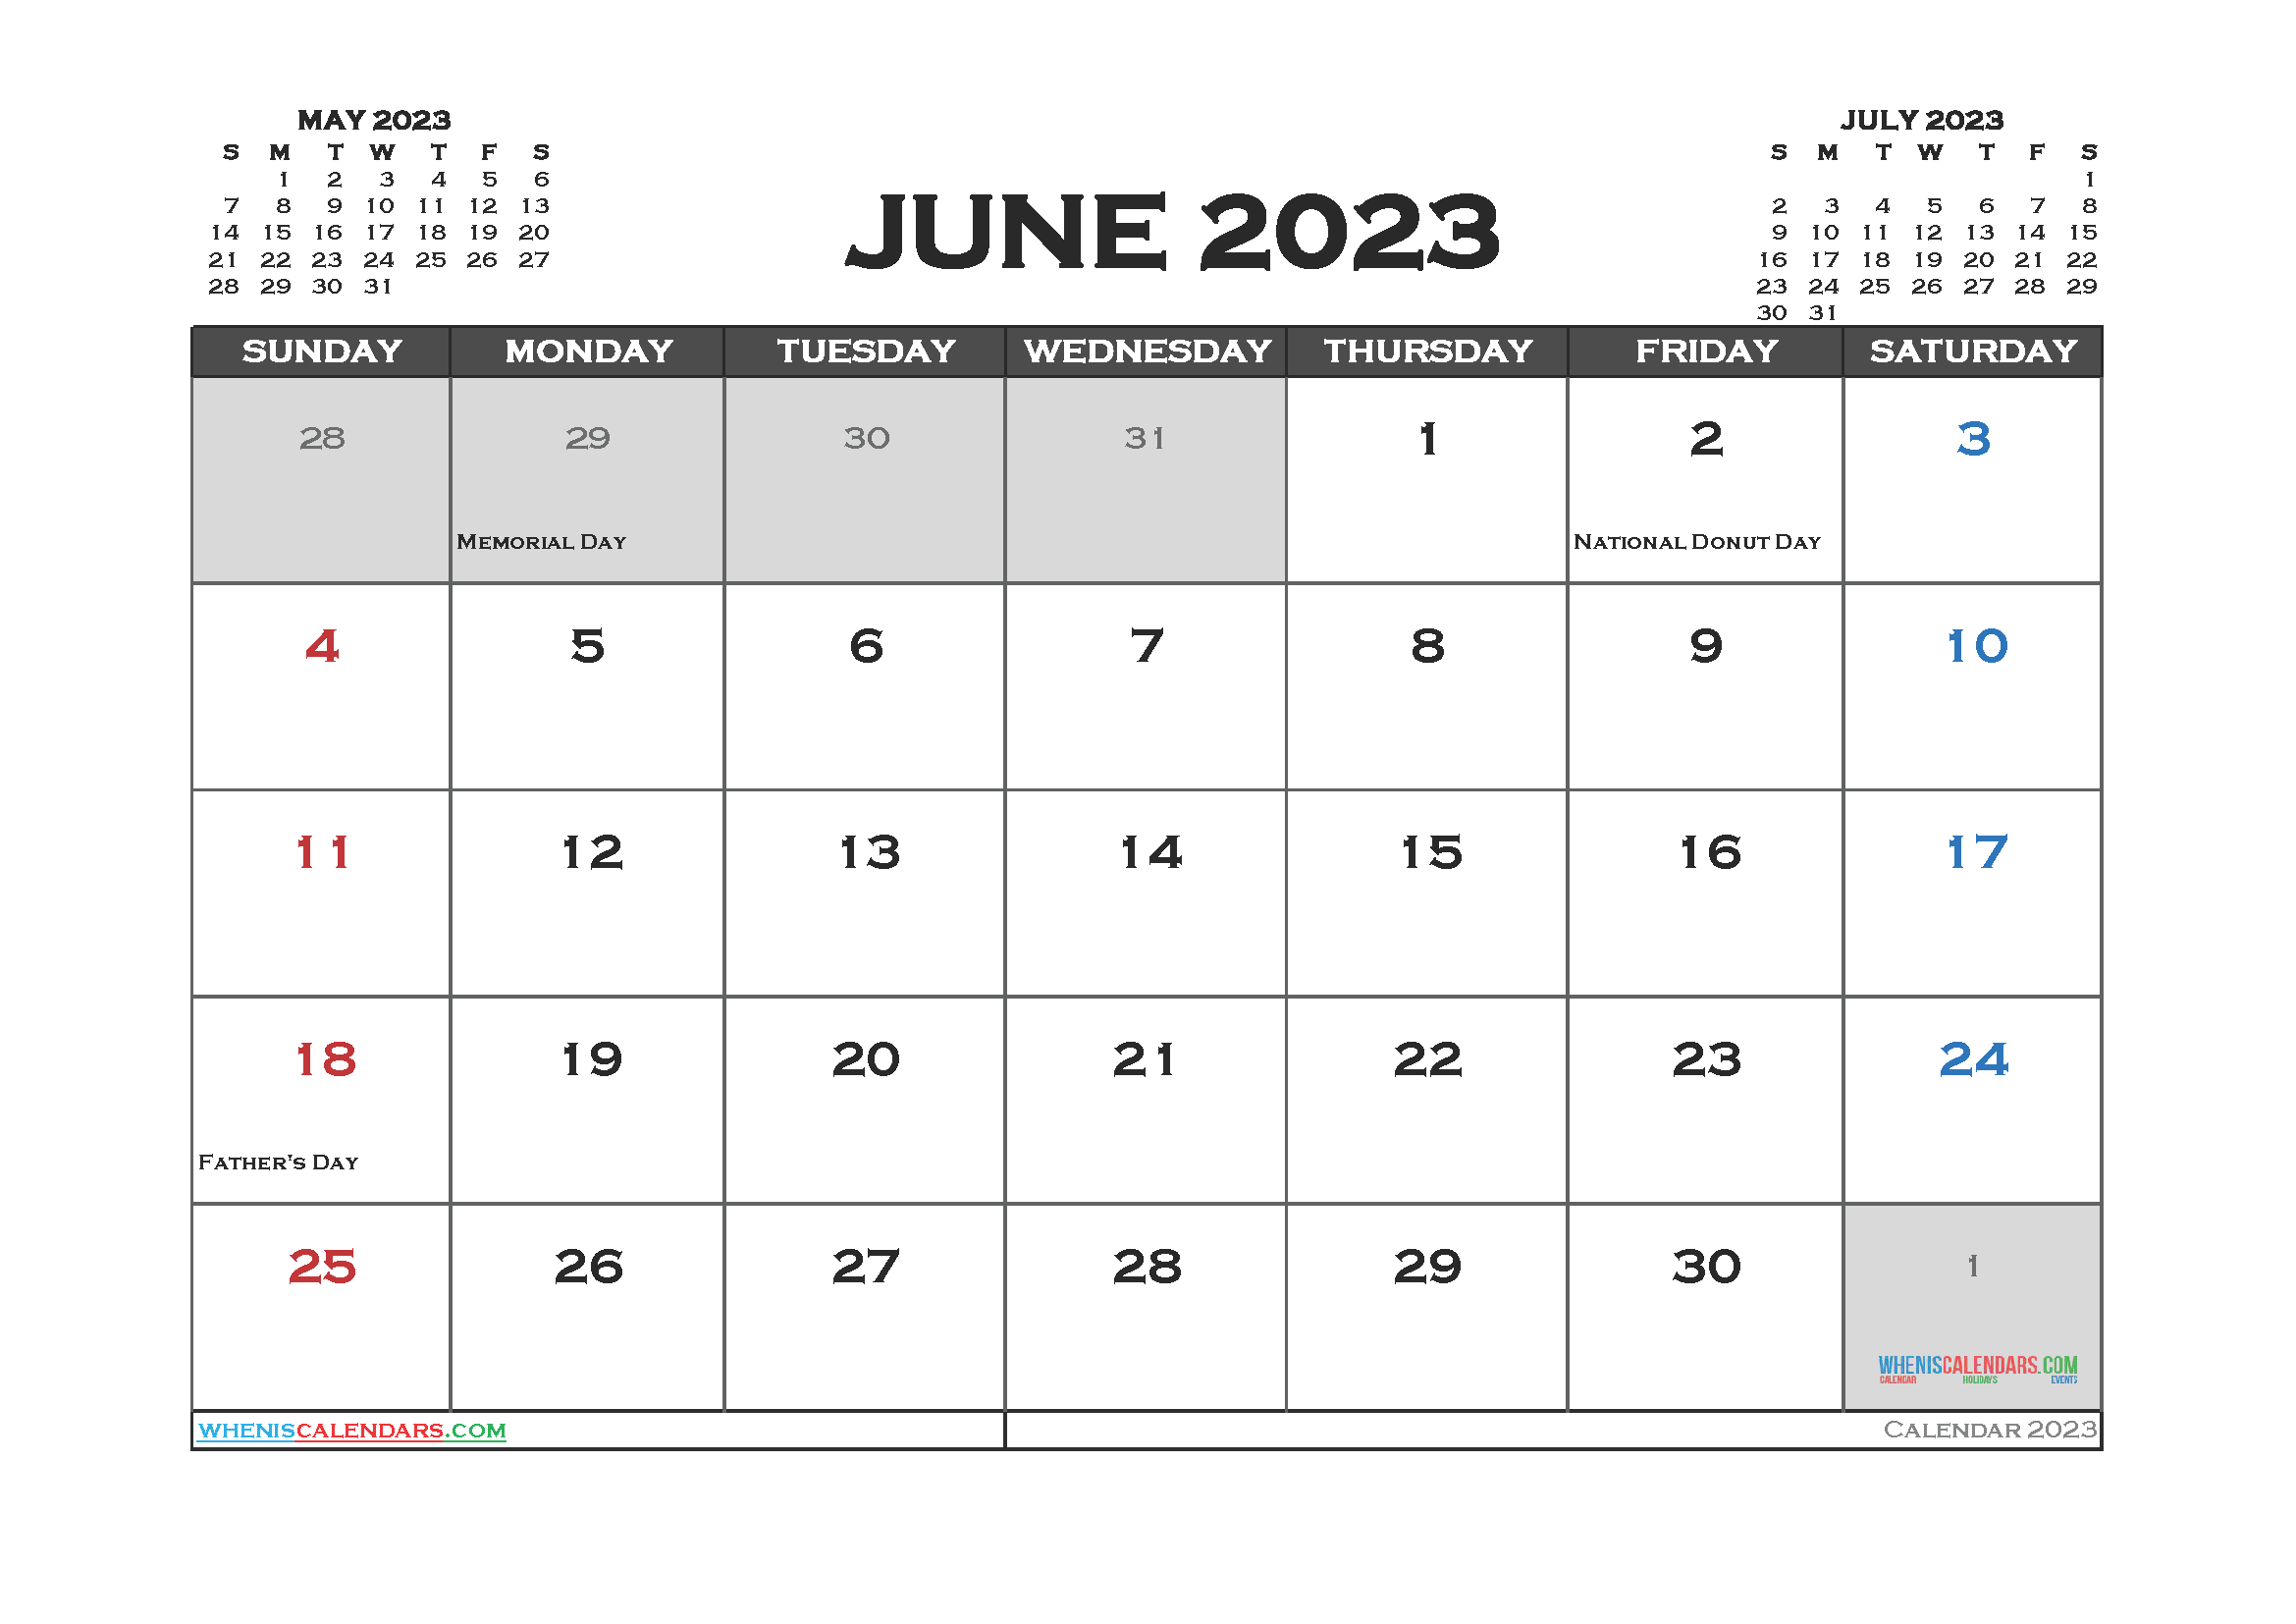 july-2023-calendar-template-free-printable-calendar-comparison-pelajaran